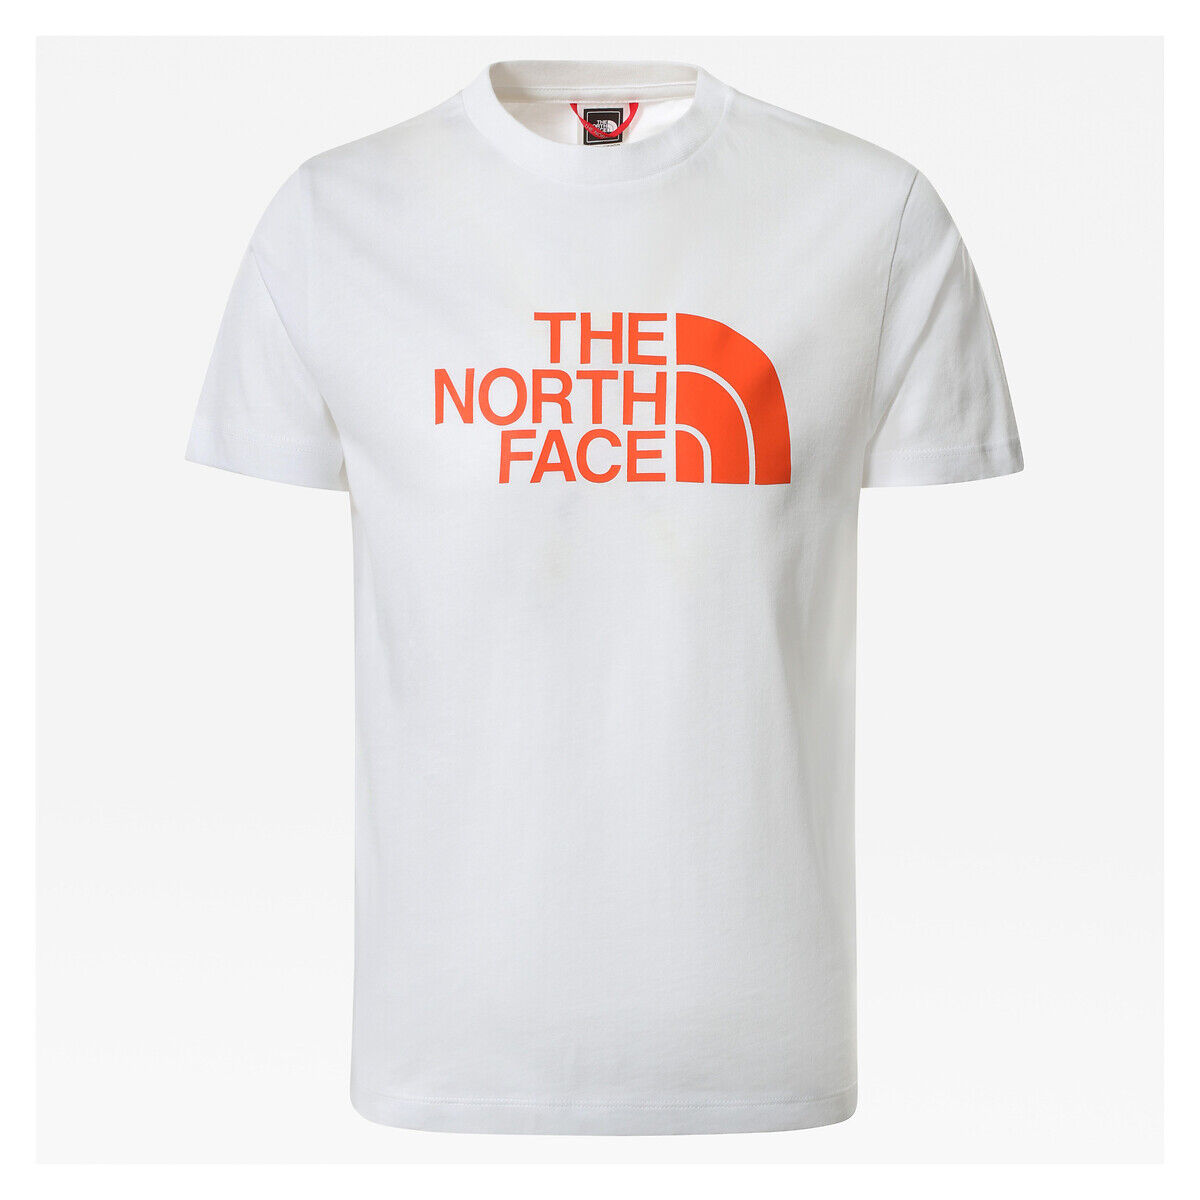 The North Face T-shirt, 6 - 18 anos   Branco/Laranja